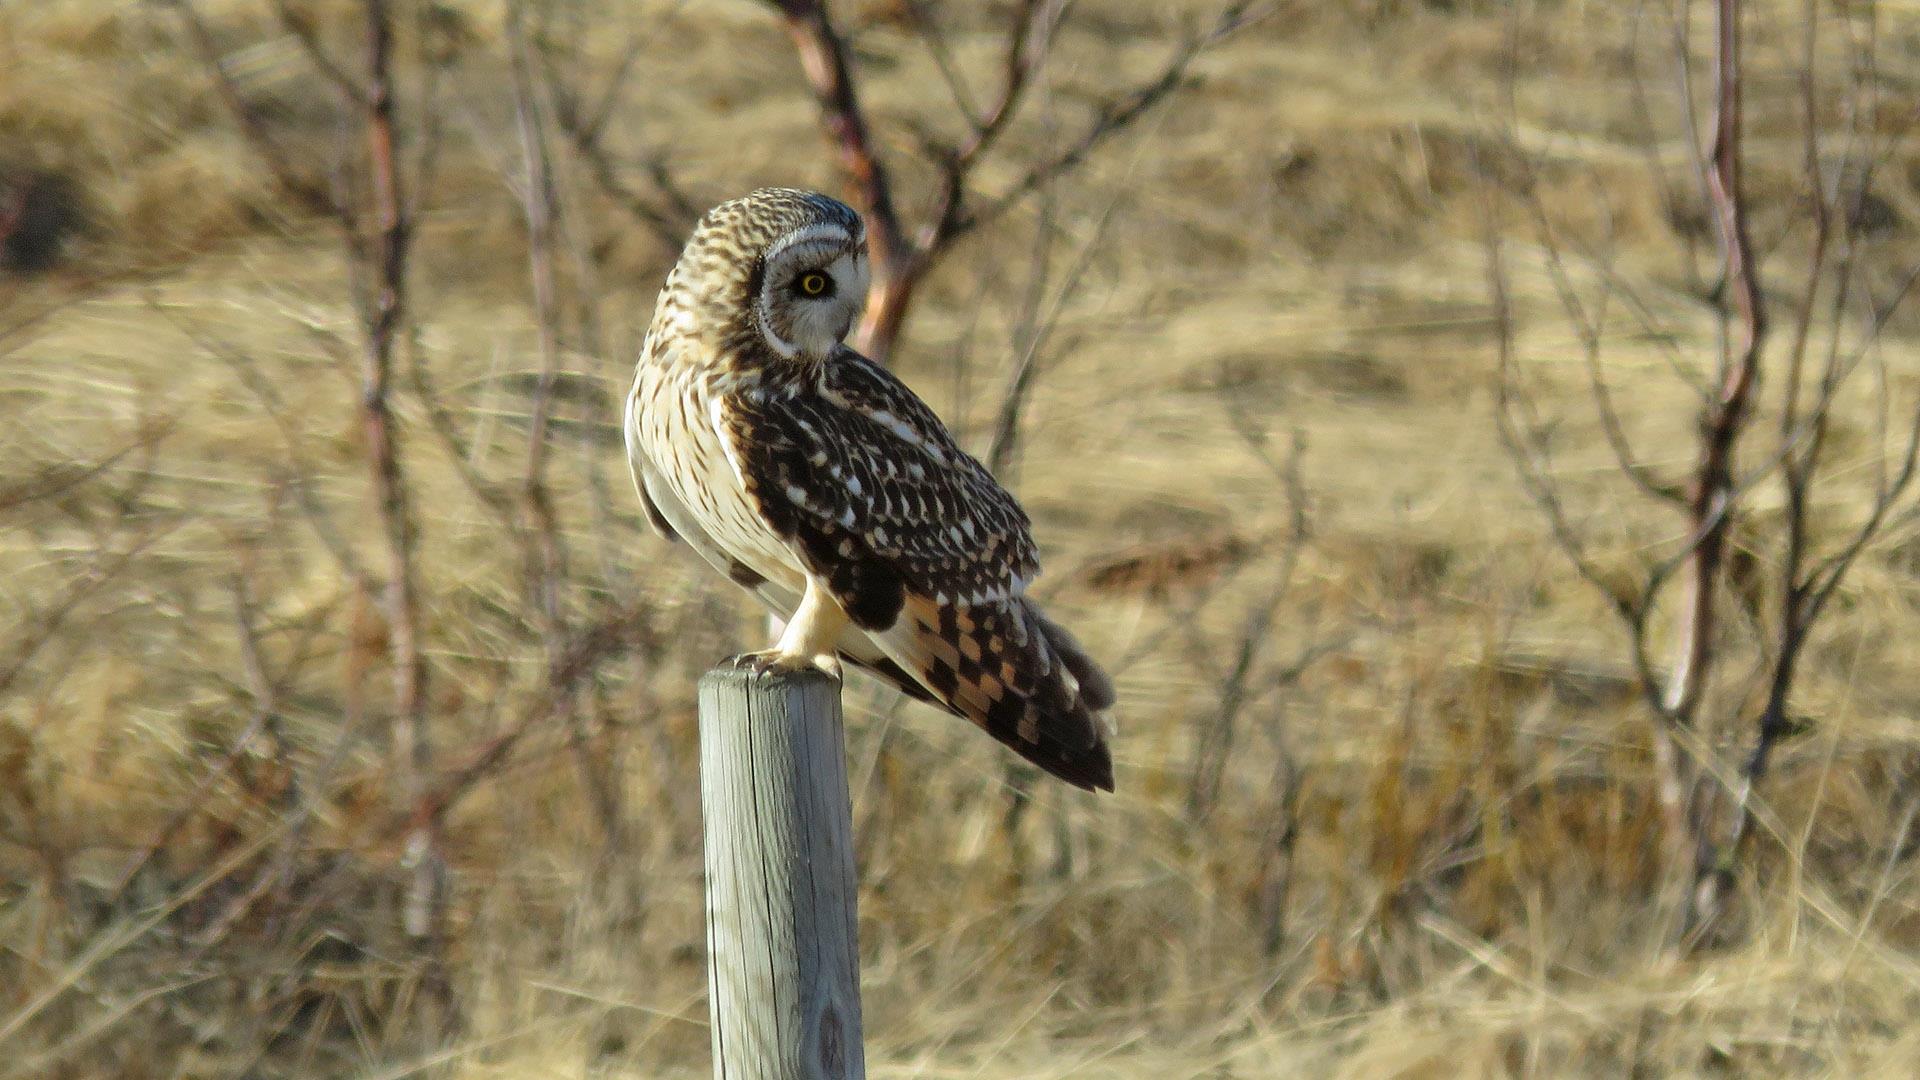 A Short-eared owl sits on a fence pole and turns its head backwards